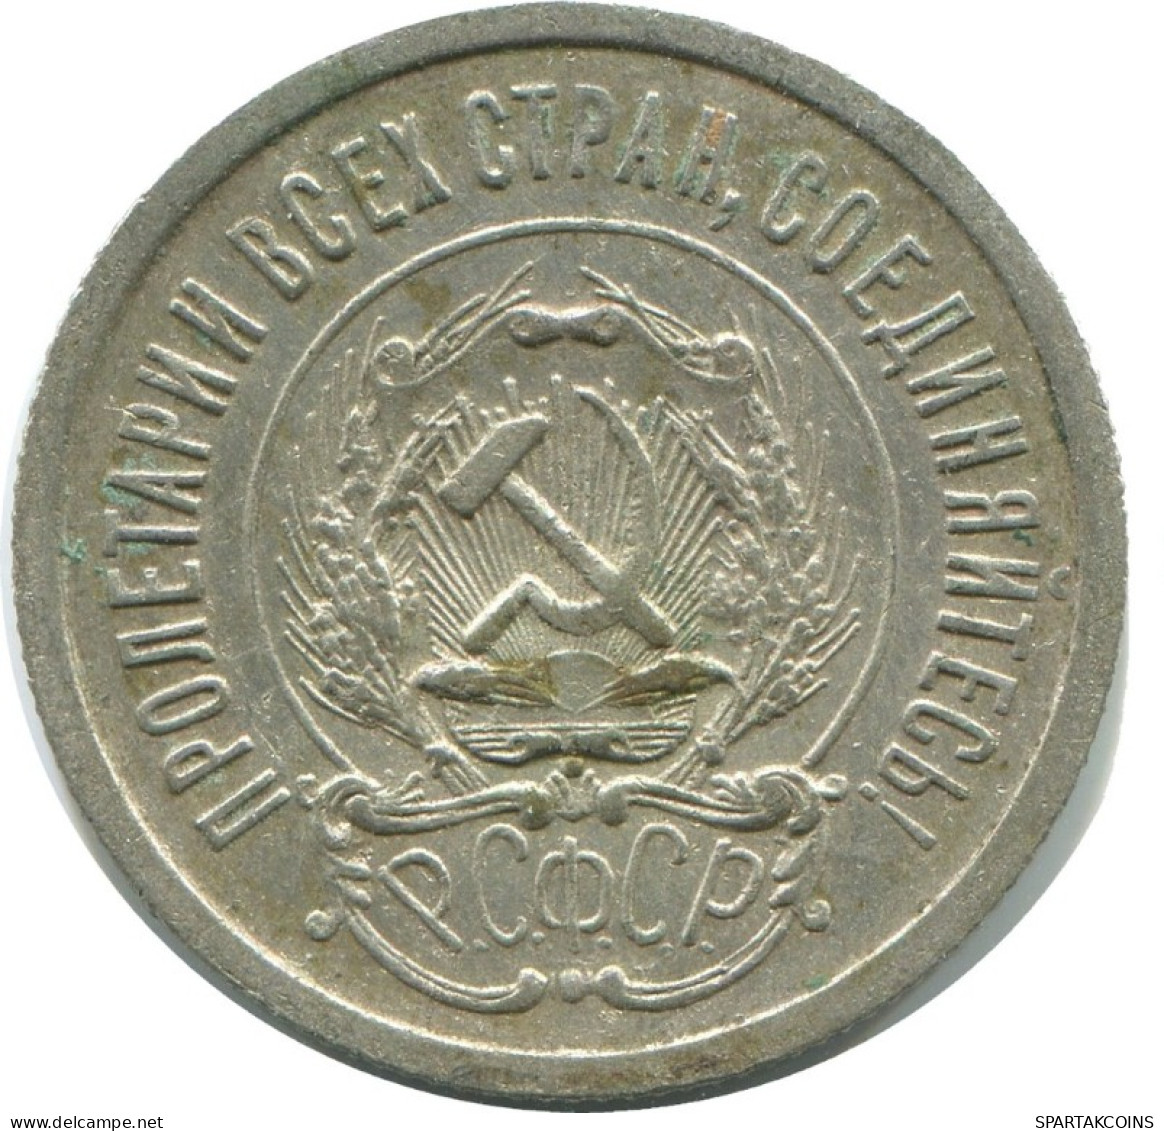 20 KOPEKS 1923 RUSSIA RSFSR SILVER Coin HIGH GRADE #AF678.U.A - Russie